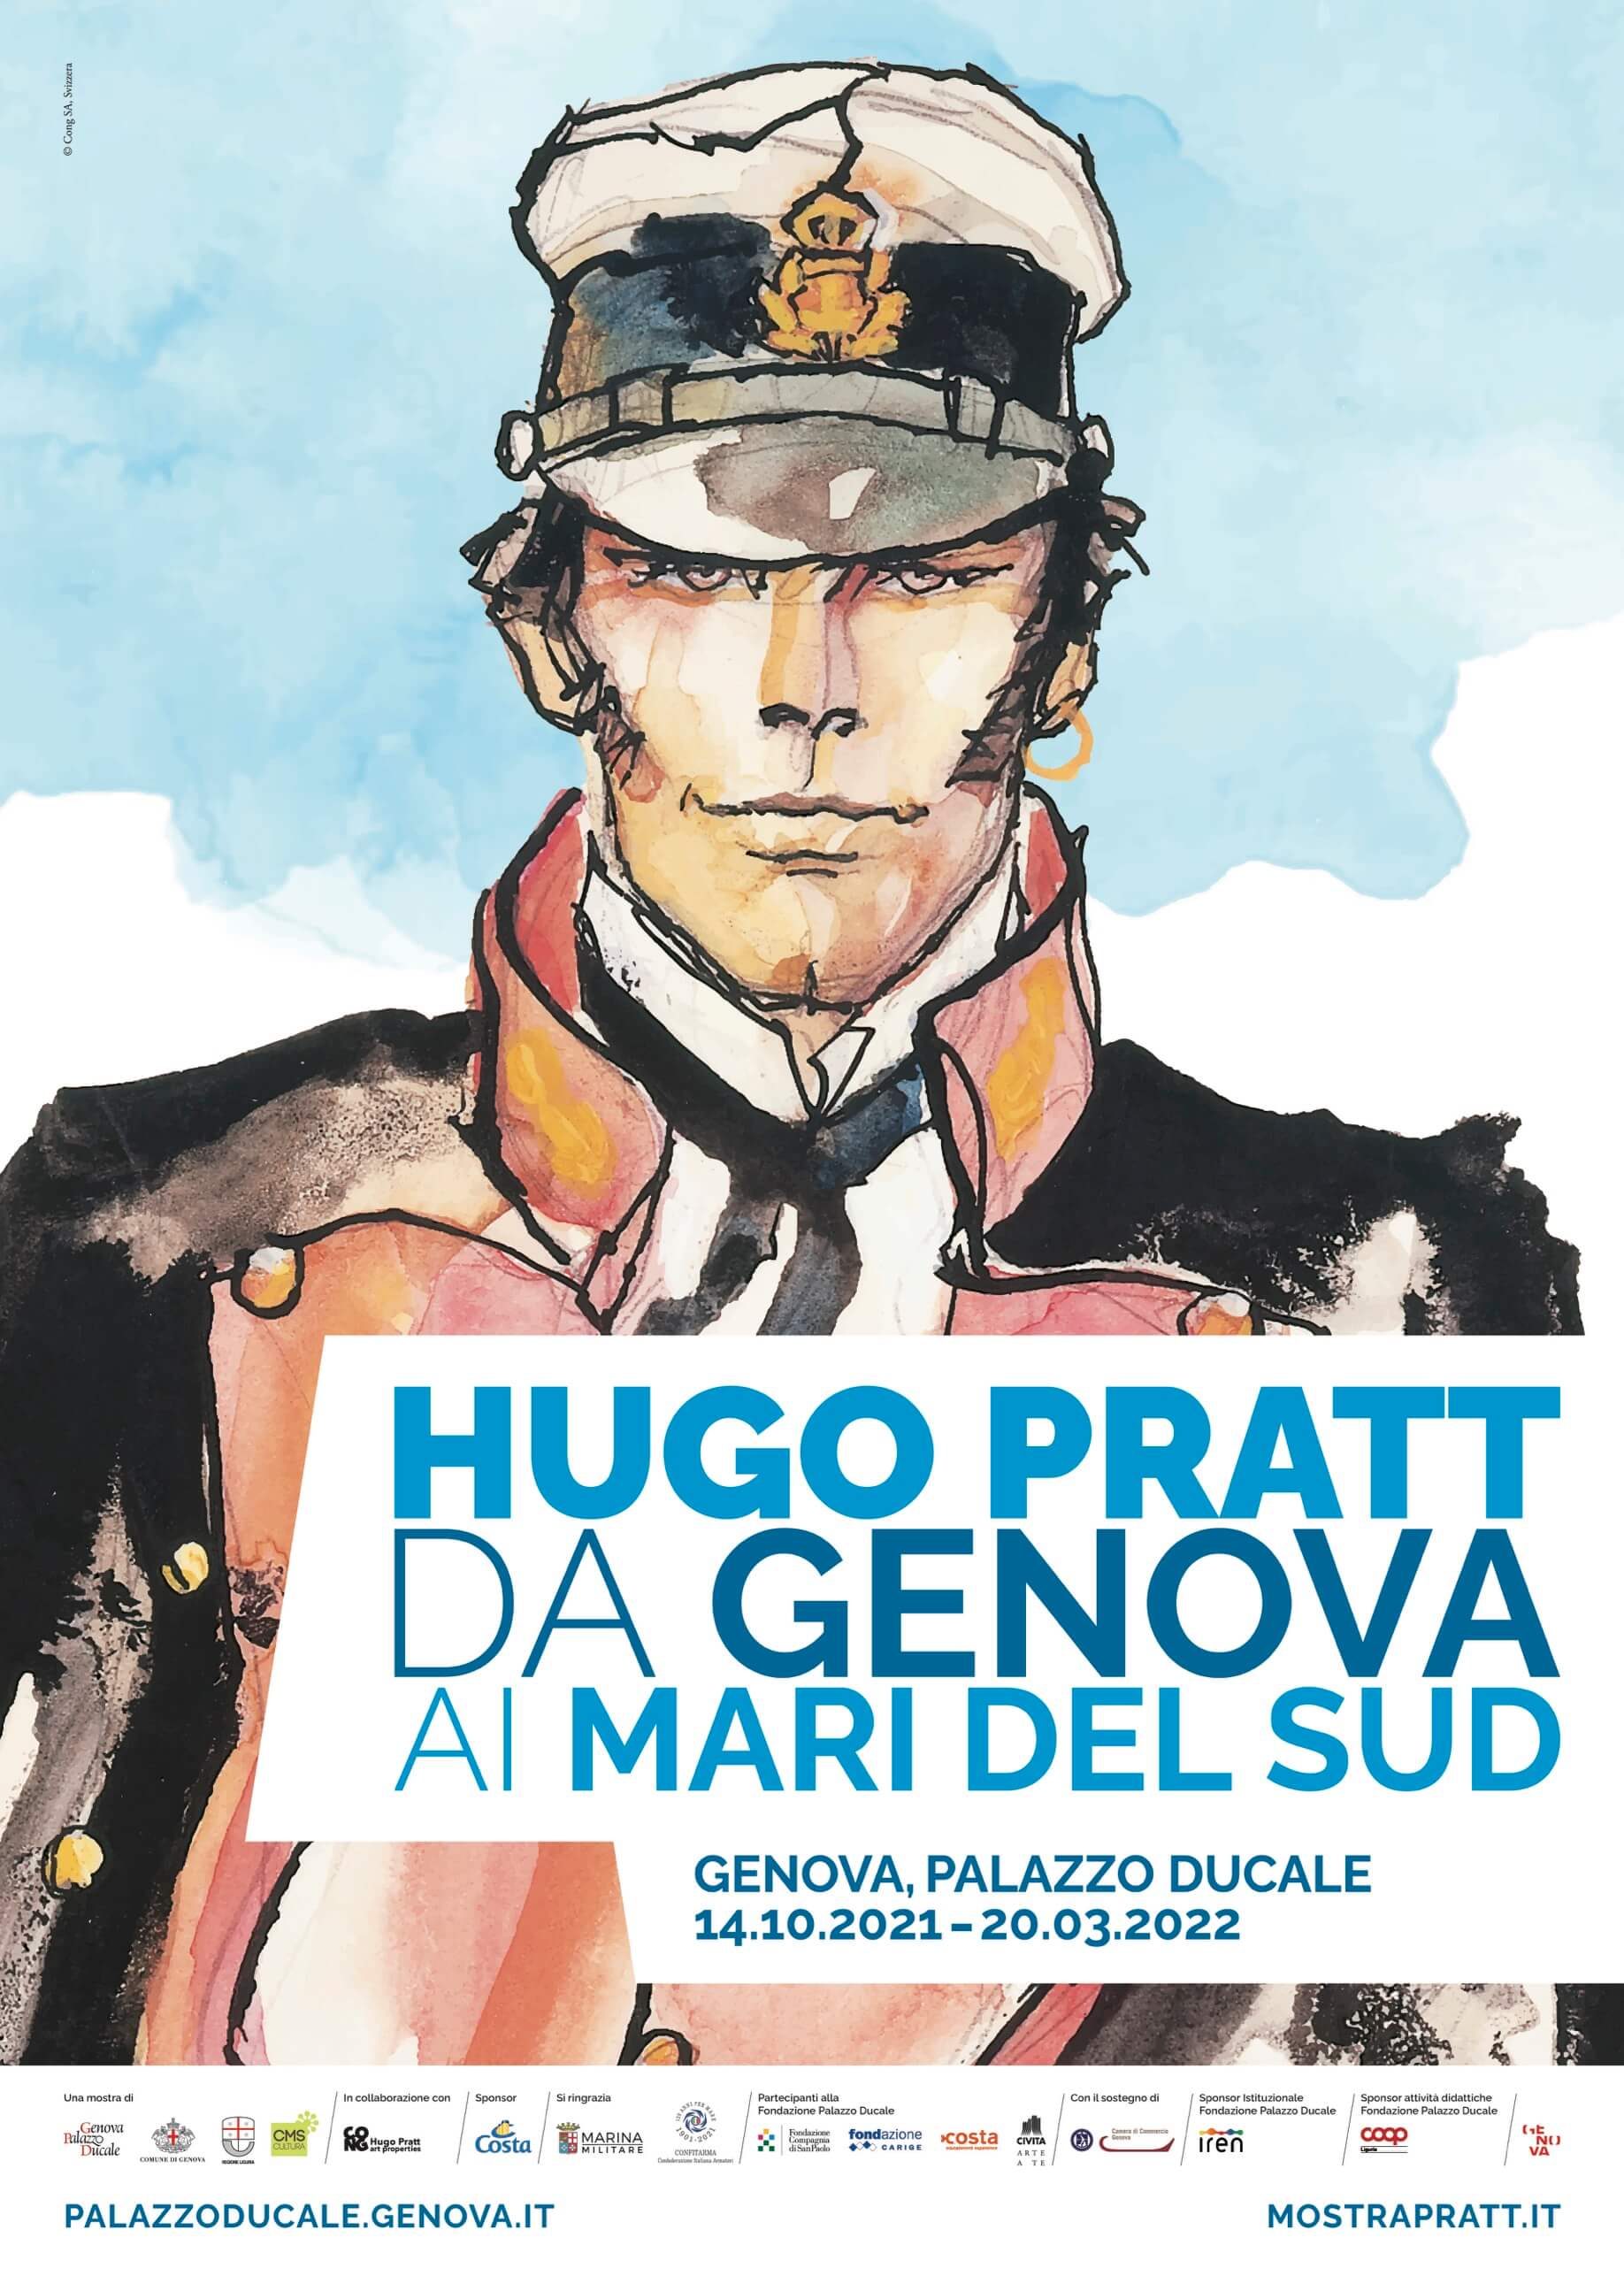 Hugo Pratt Gênes